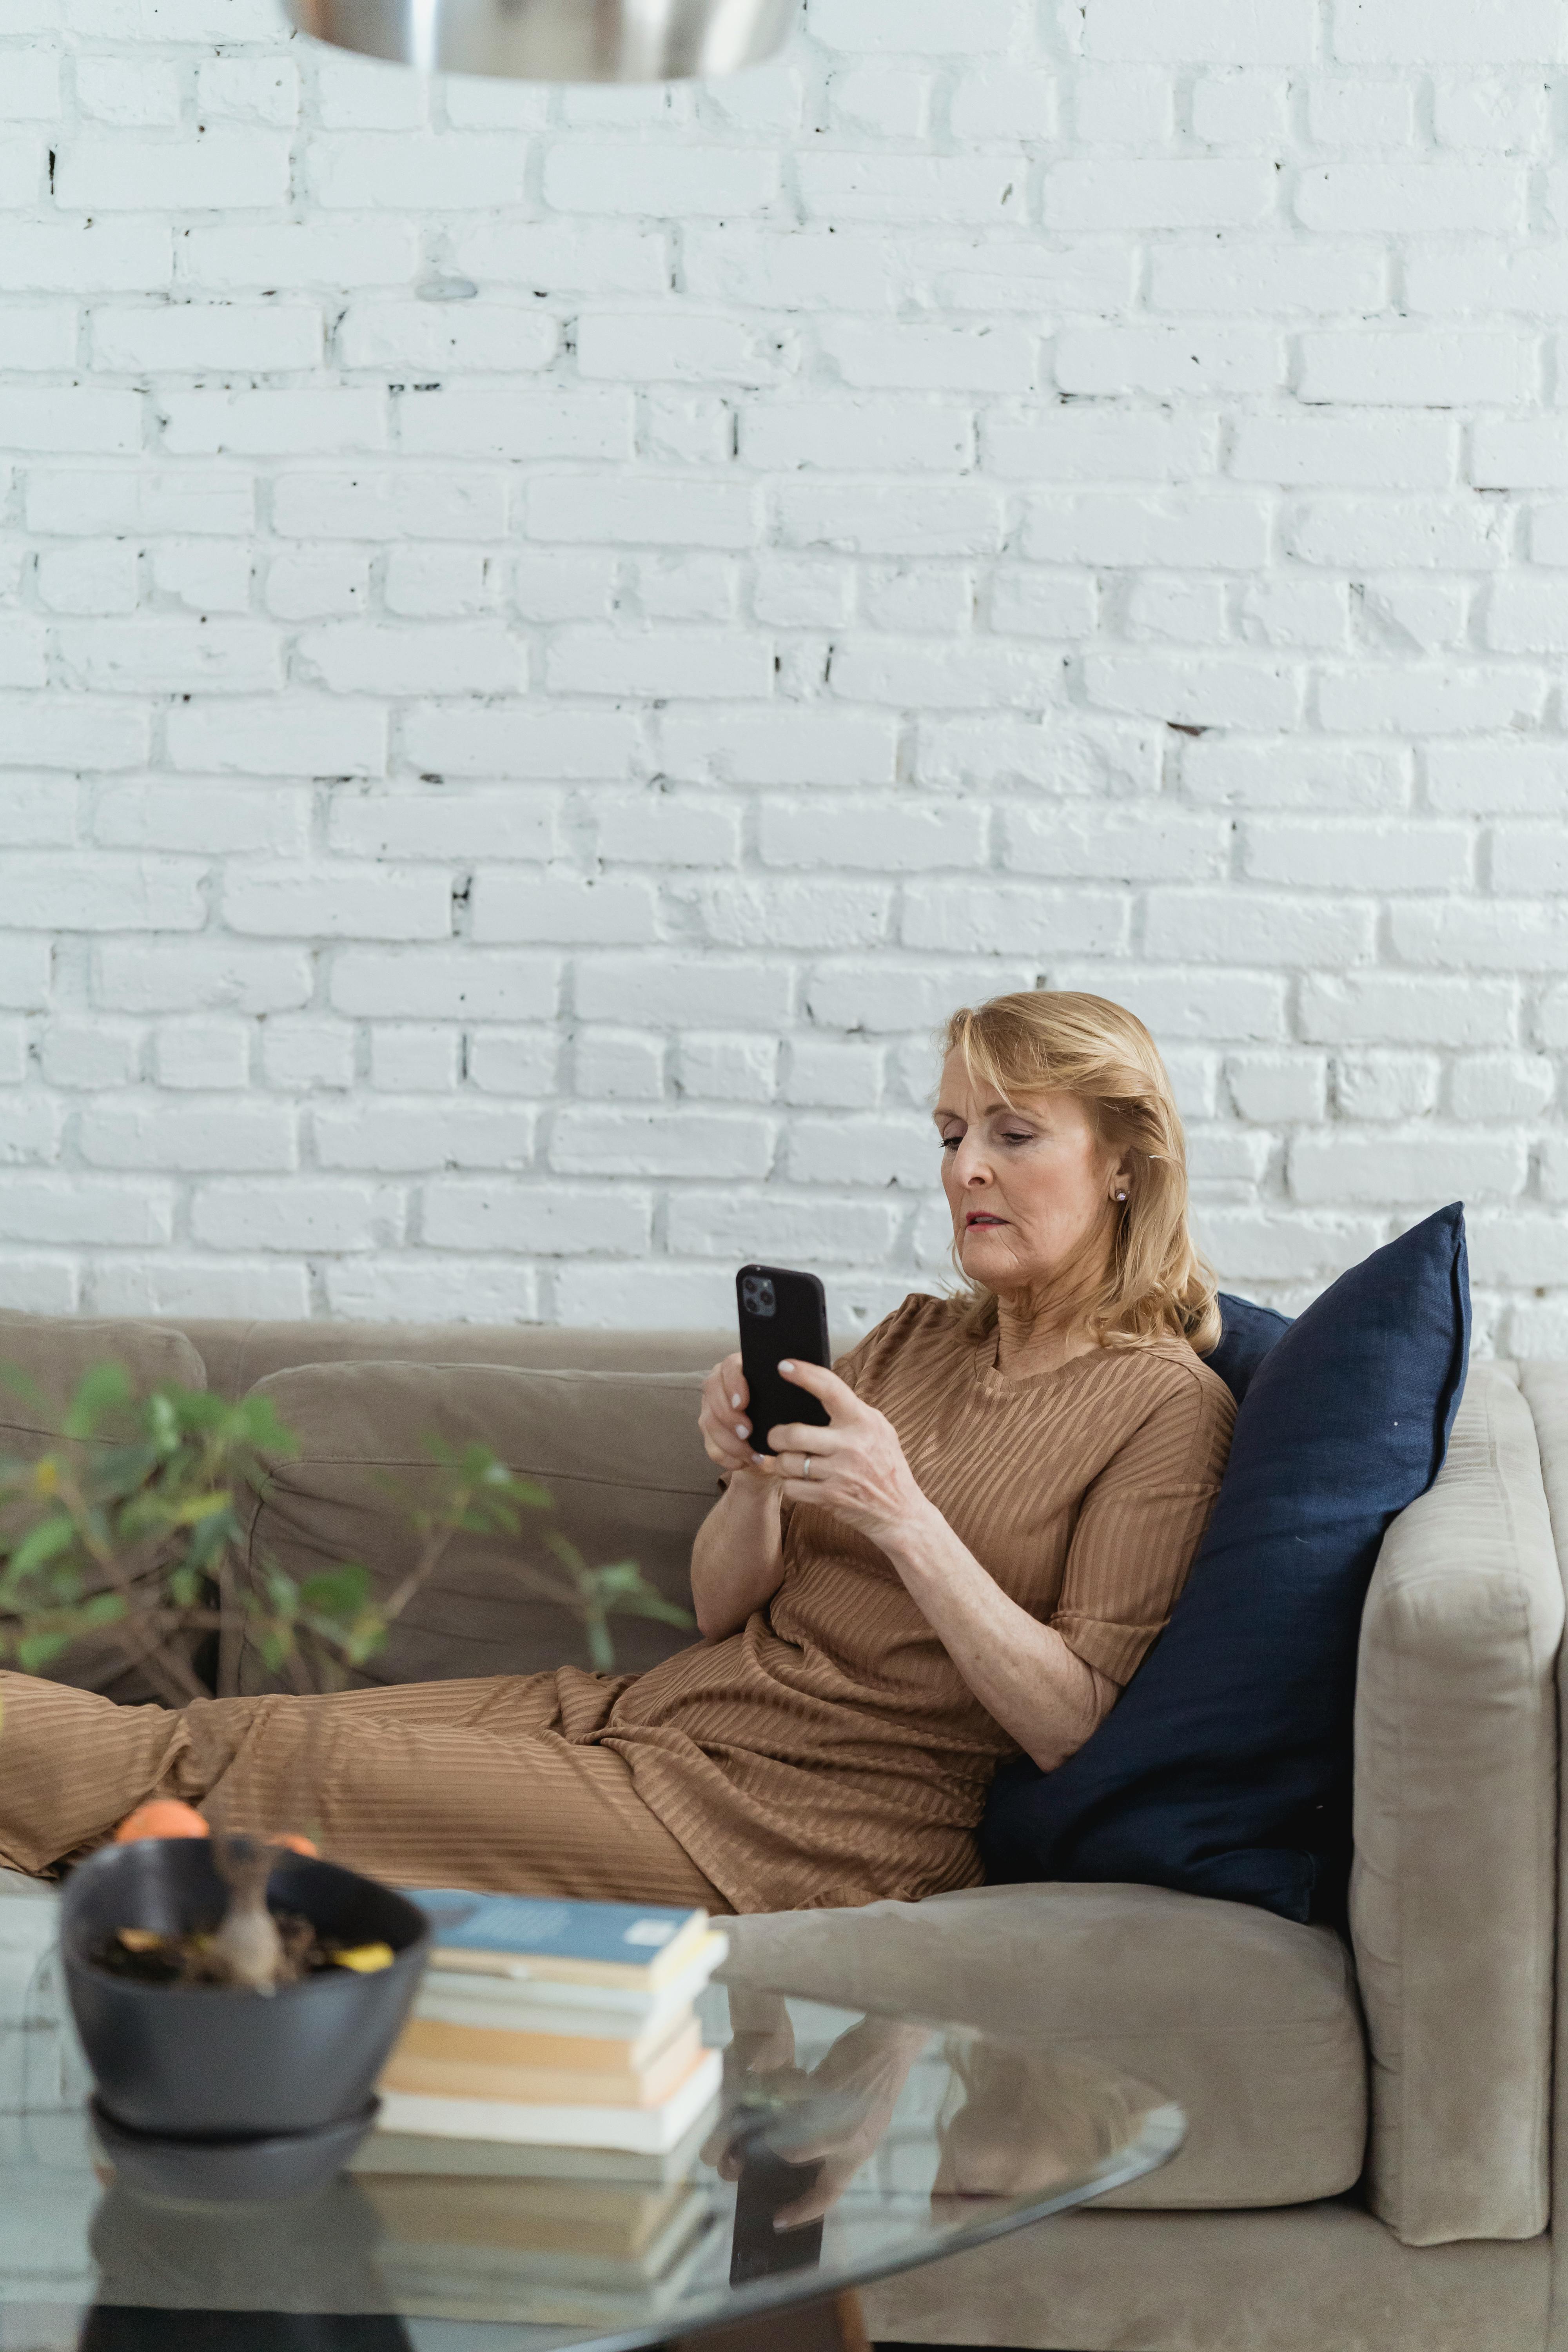 A senior woman using her phone | Source: Pexels